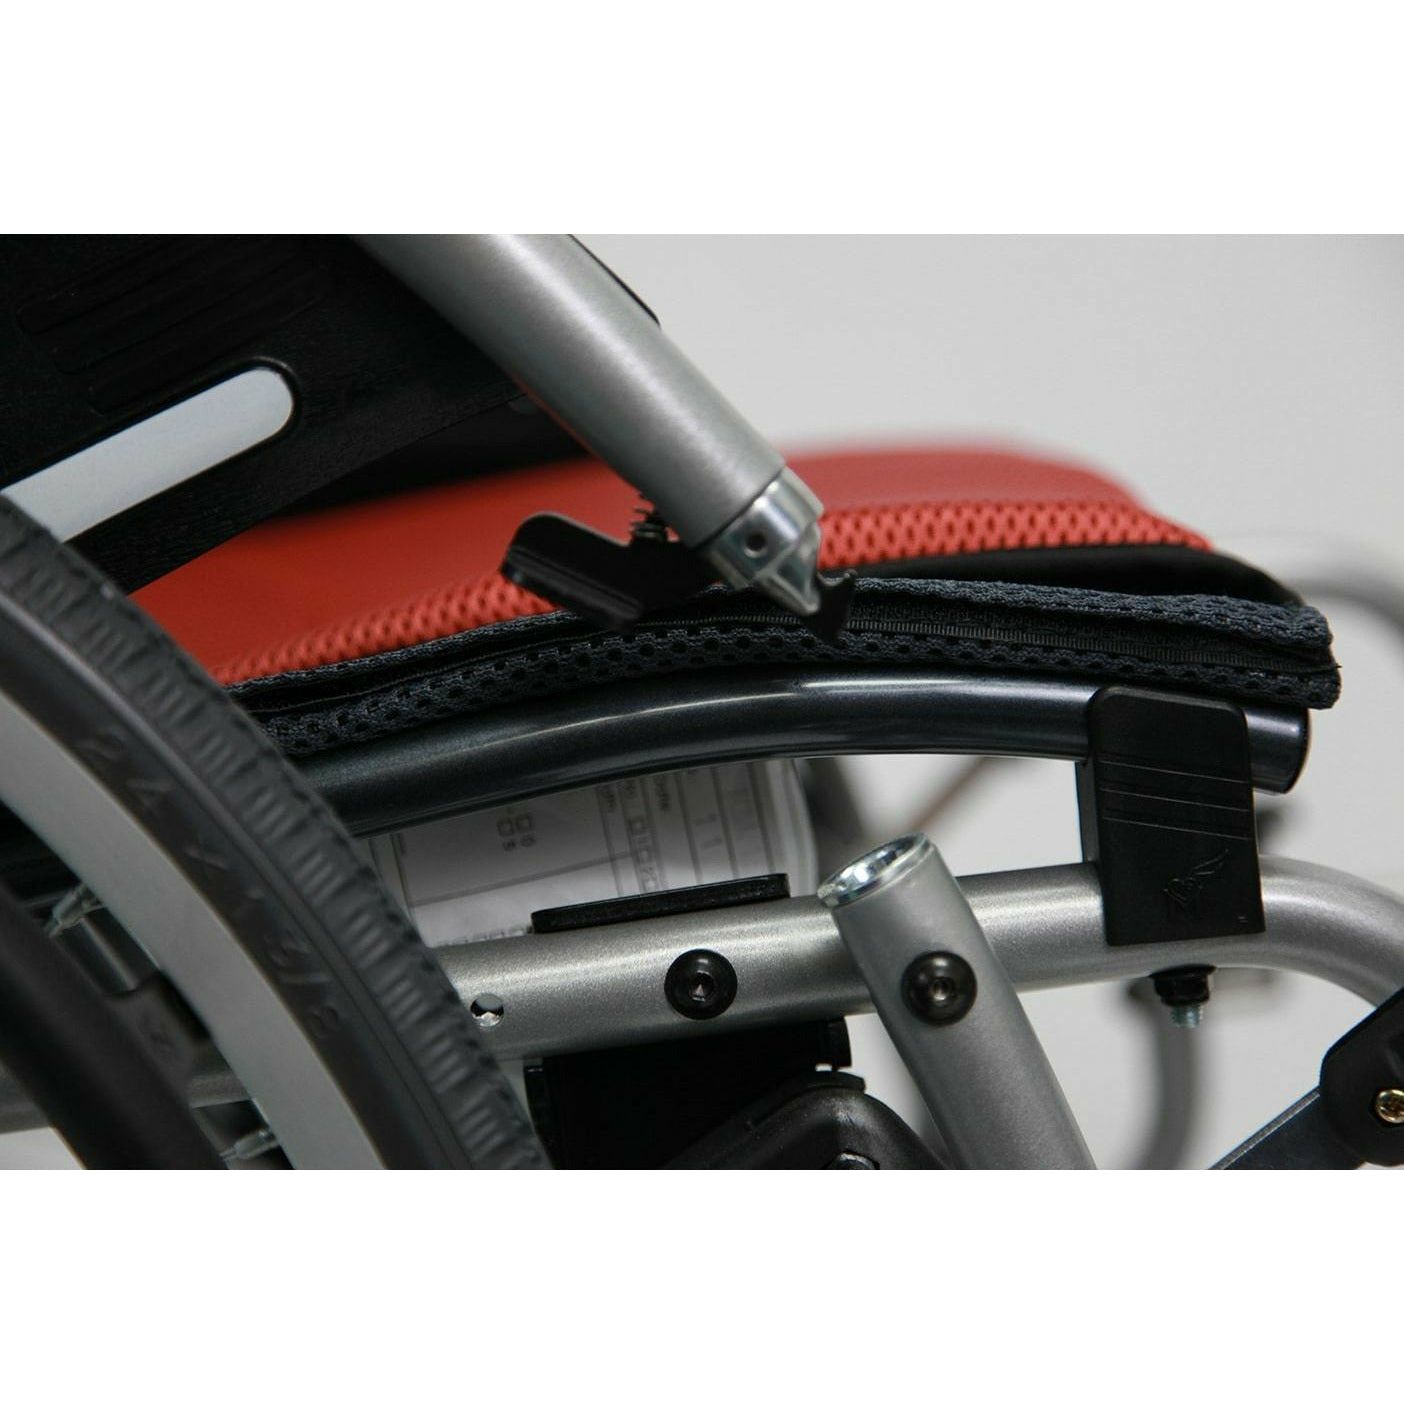 Karman Healthcare S-Ergo 125 Flip-Back Armrest Ergonomic Manual Wheelchair